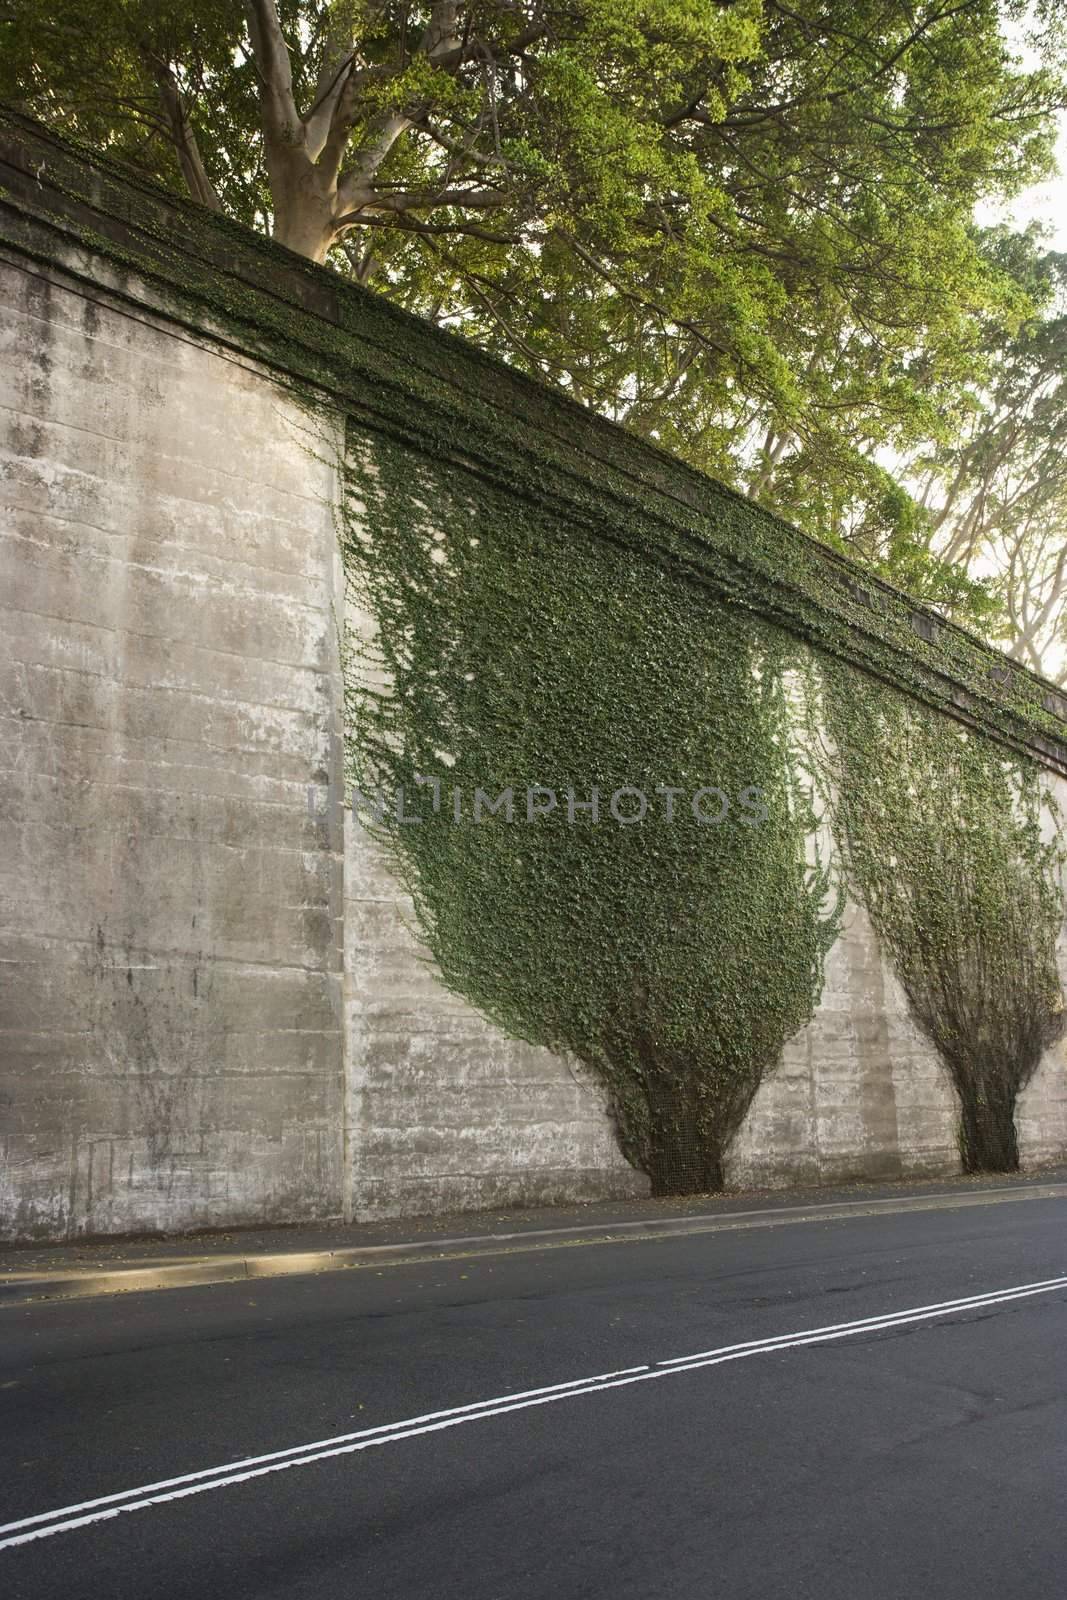 Ivy plants crawling up cement wall along roadside in Sydney, Australia.